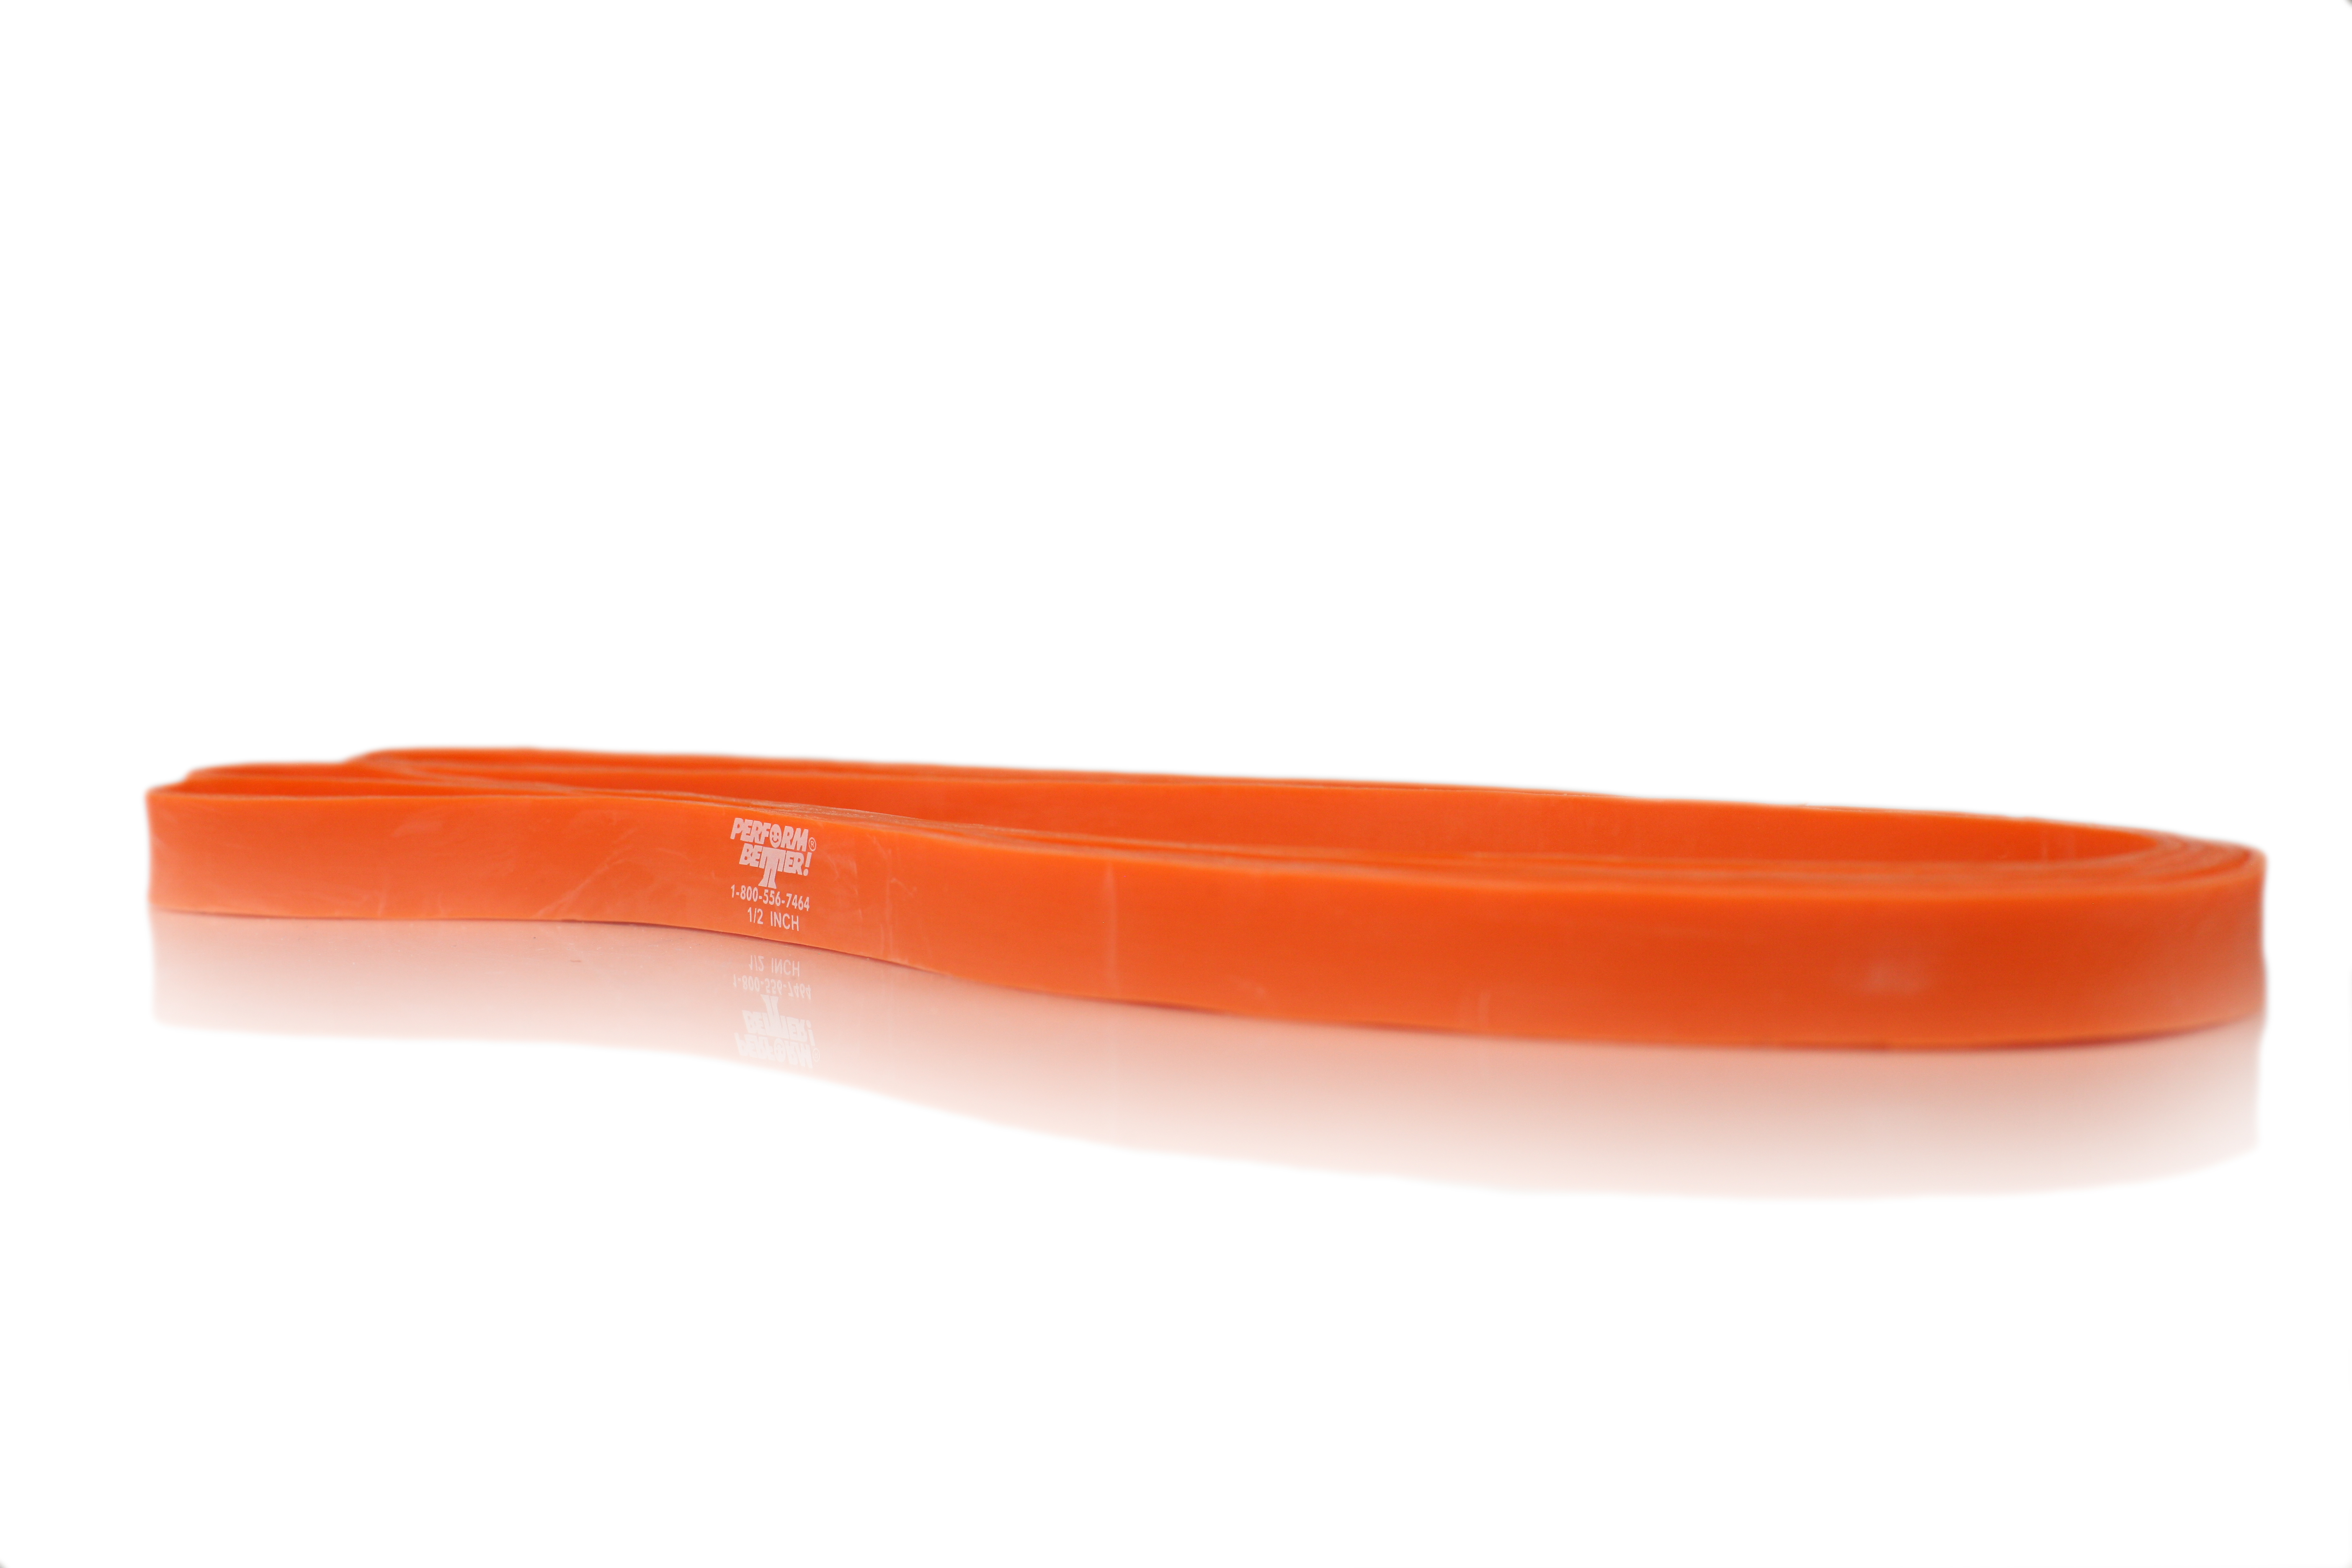 Superbands - 0,6 cm breit, 6 kg, orange 5mm dick